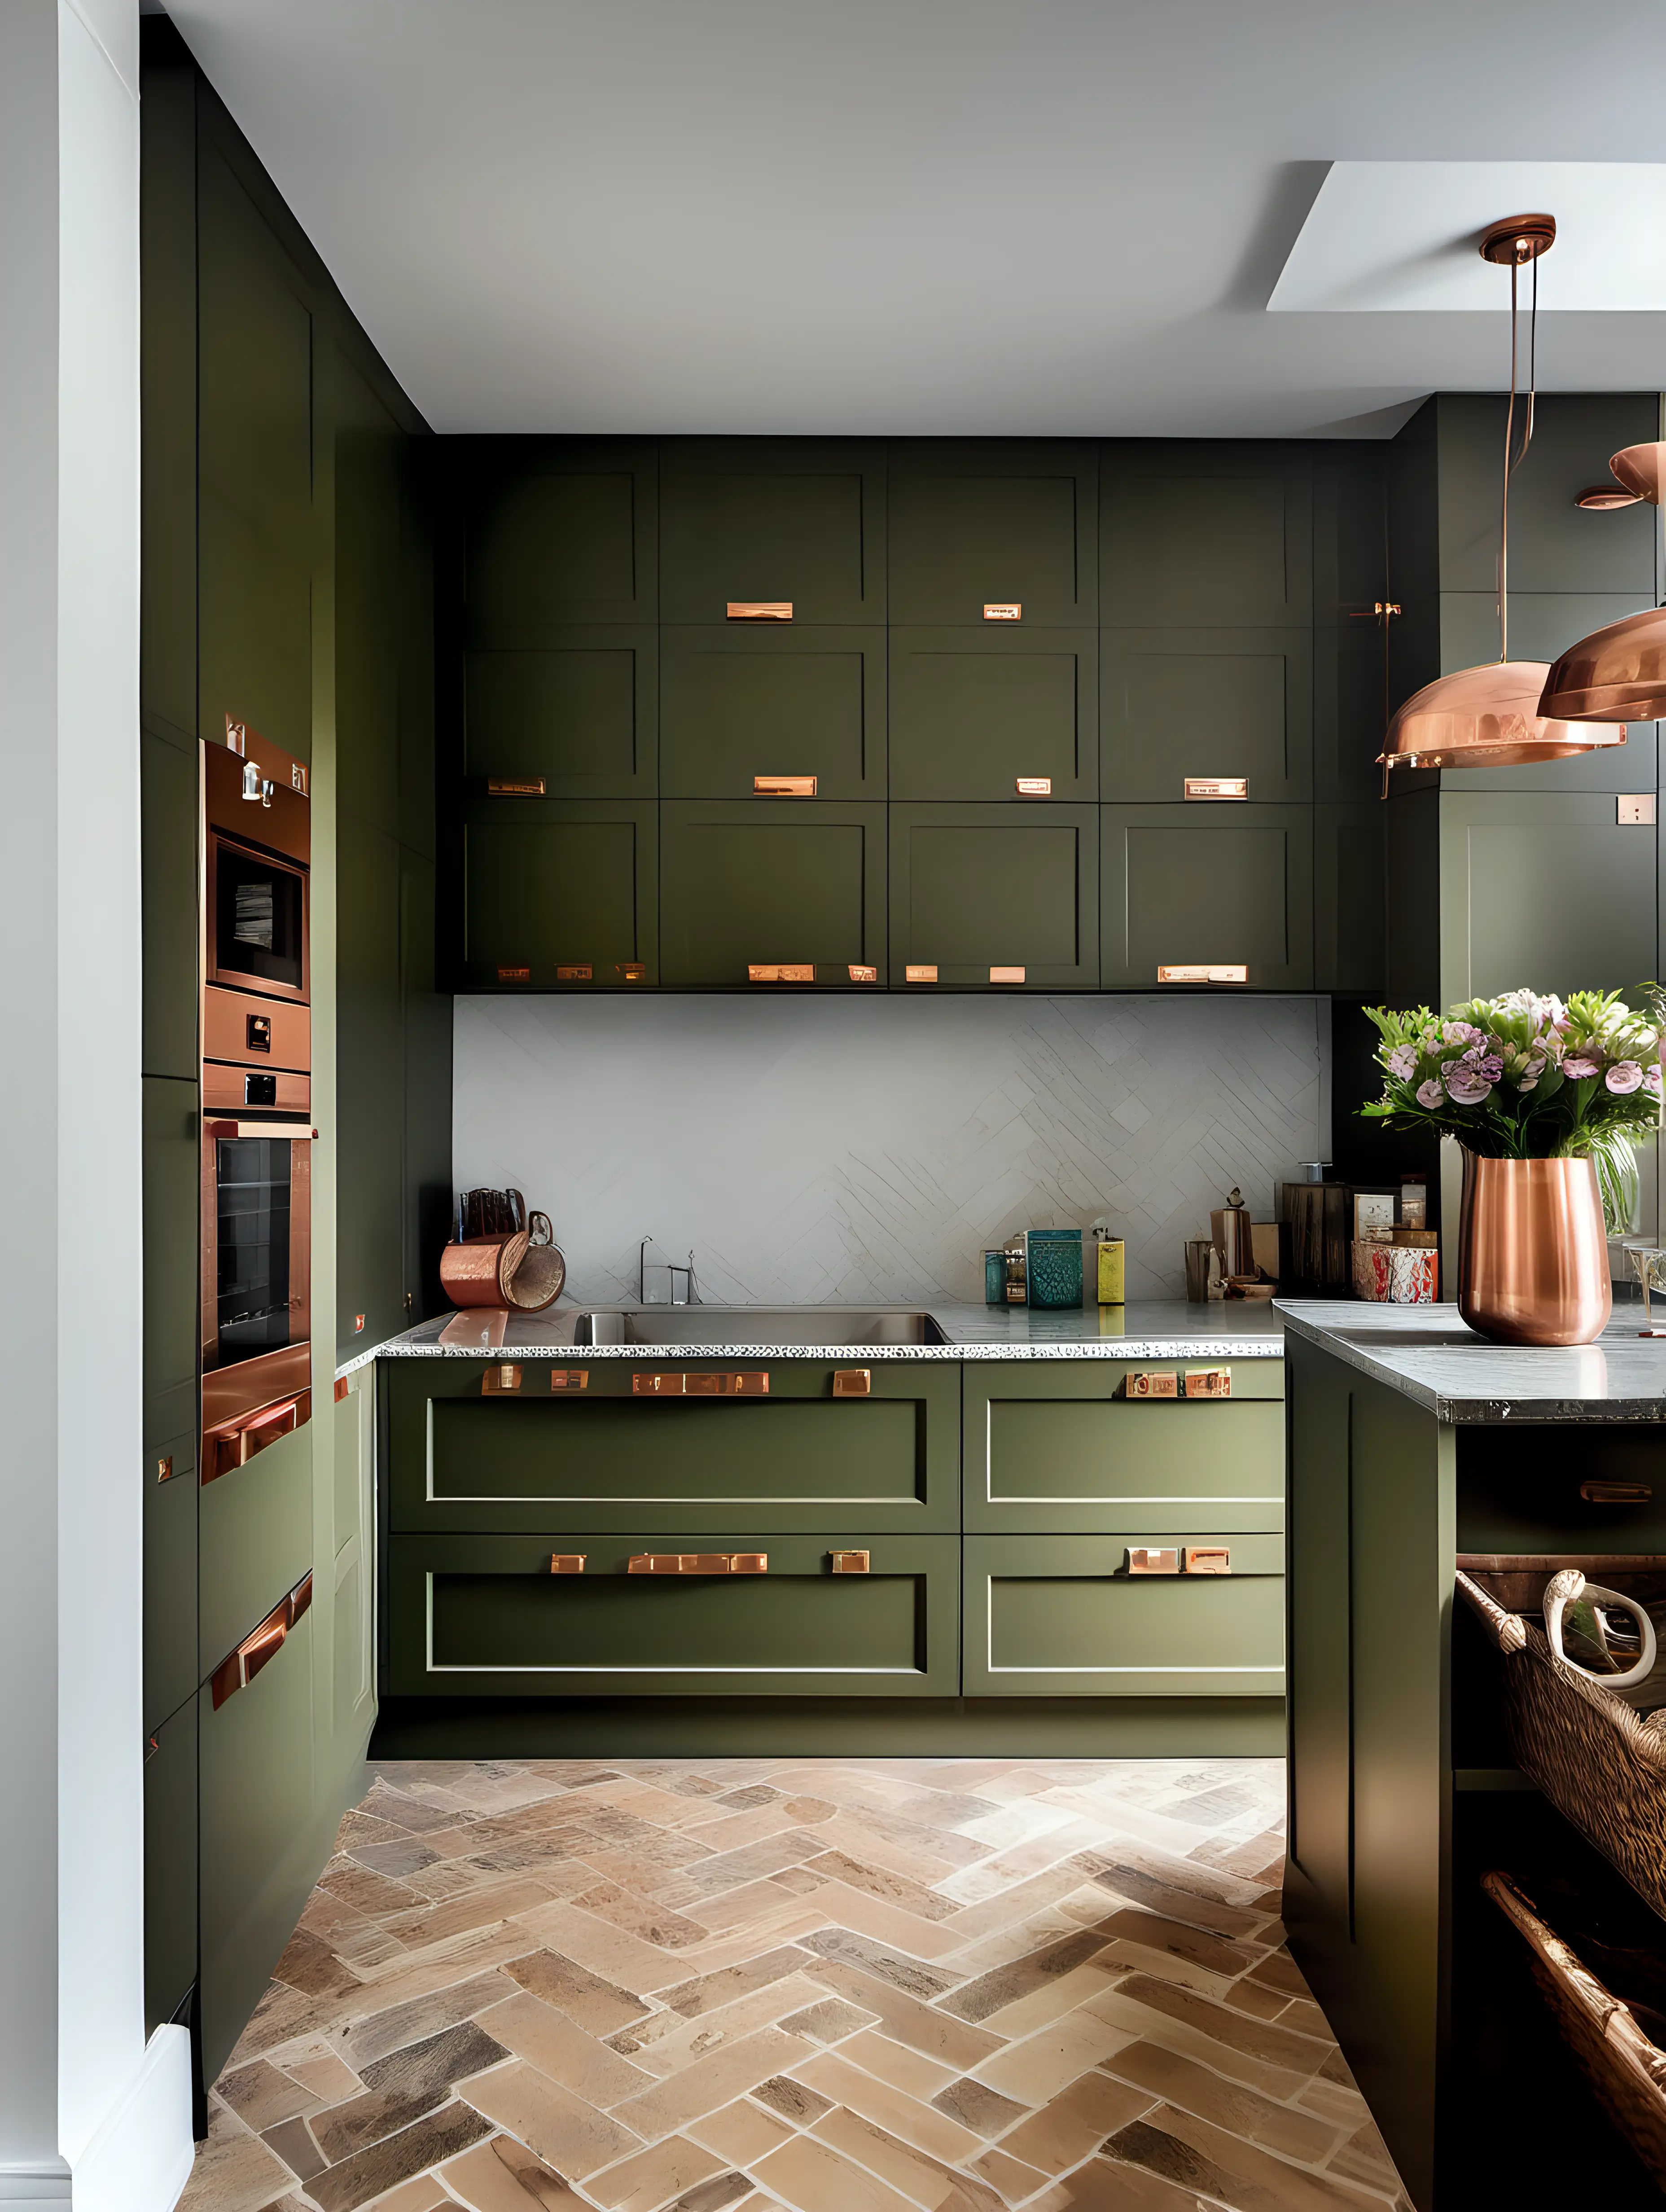 kitchen
olive green
copper accessories
pantry in wood
small island
granite worktops
herringbone floor

